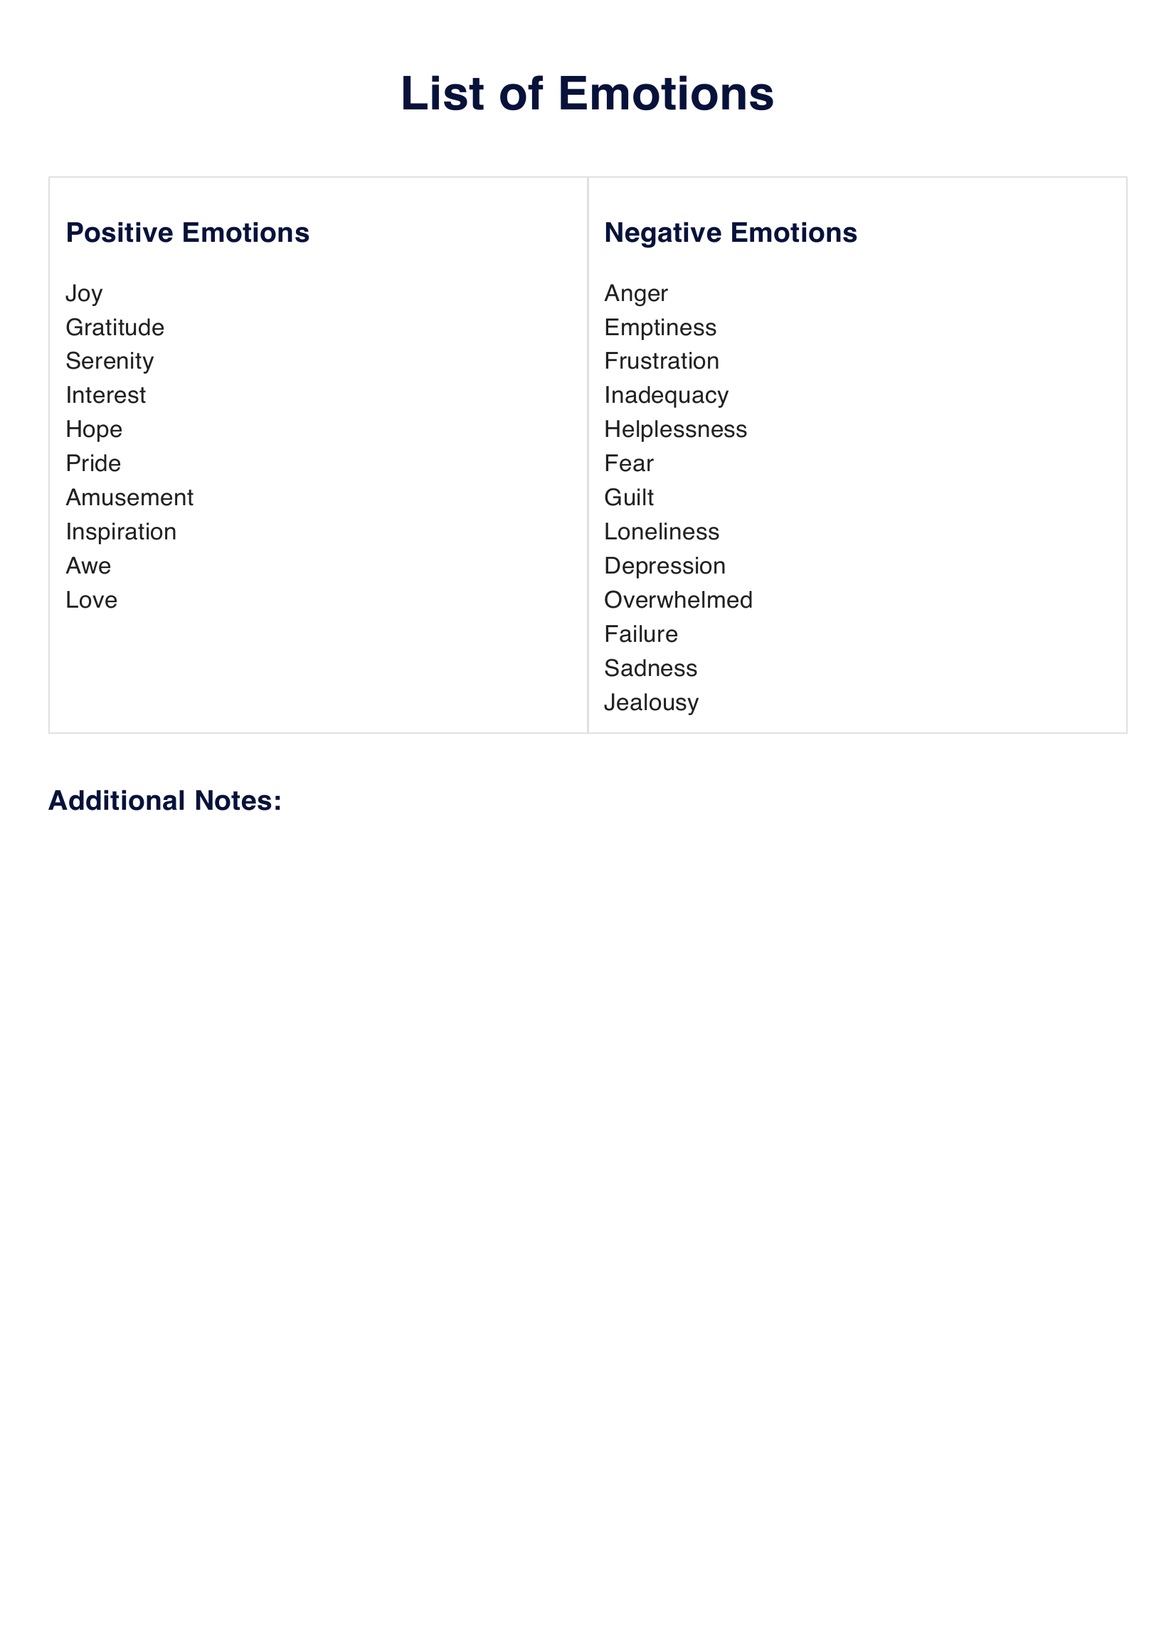 List of Emotions PDF Example